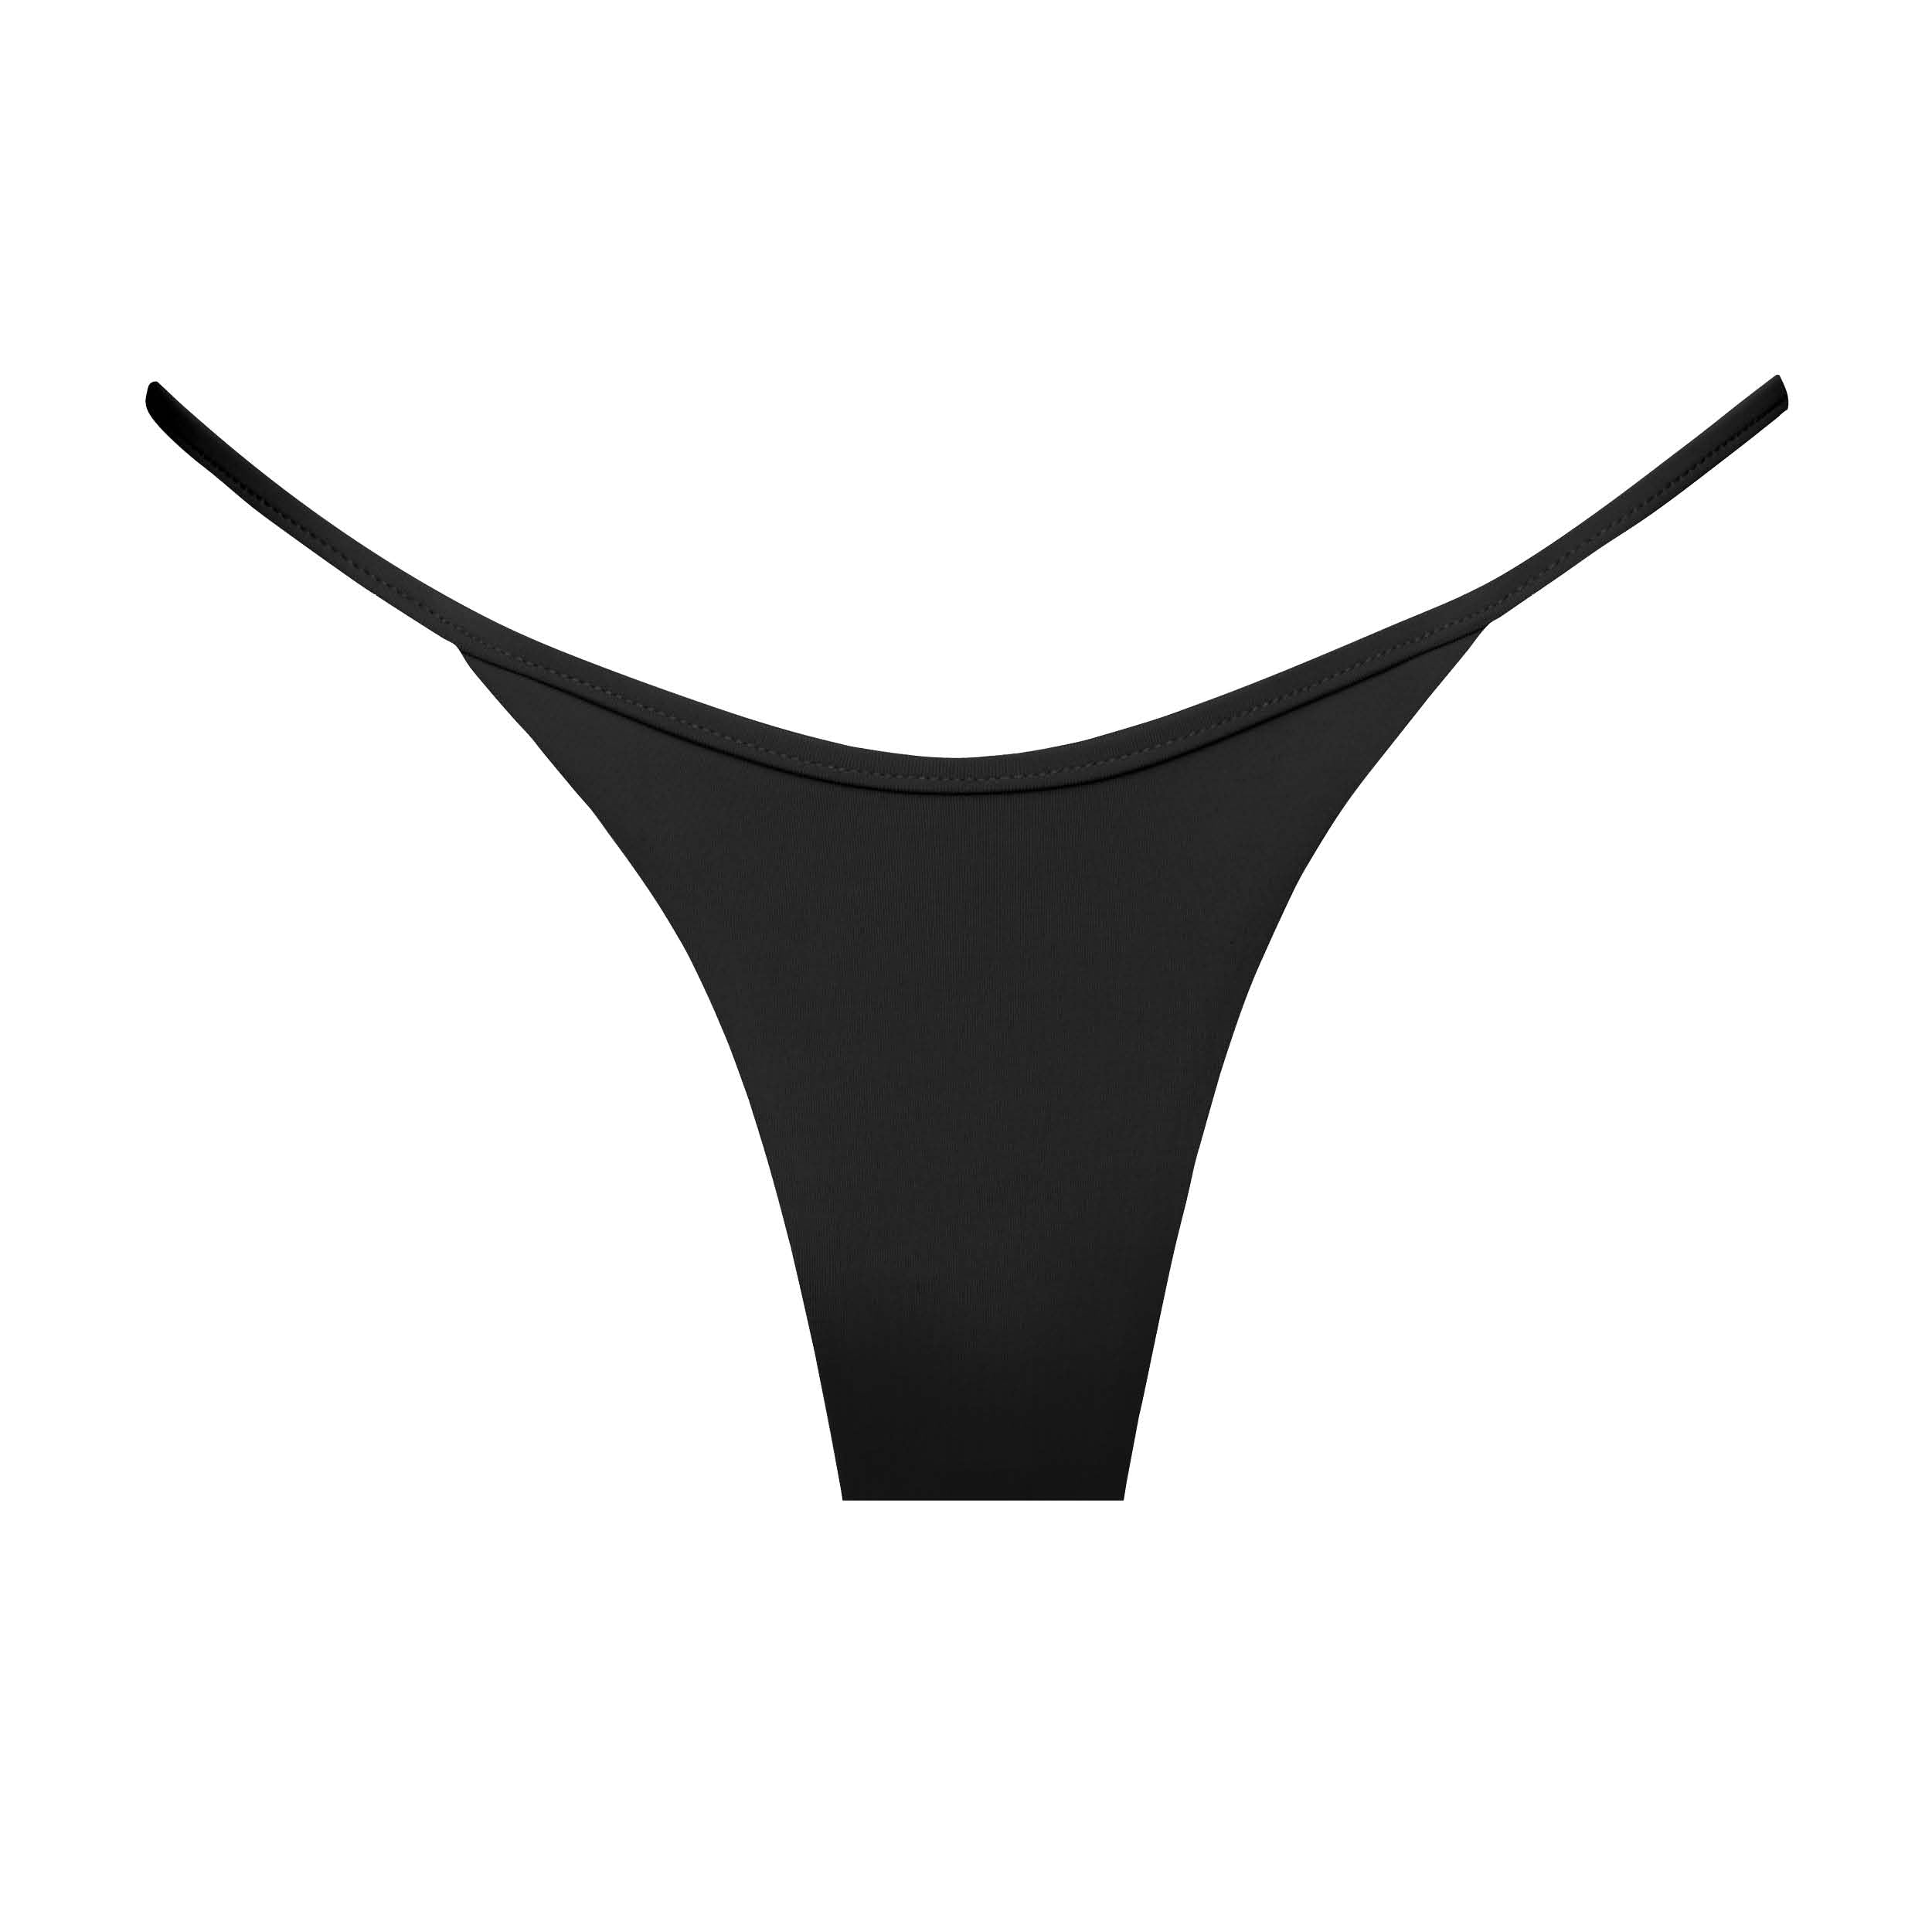 Kashmir: The Cheeky Adjustable String Bikini Bottom